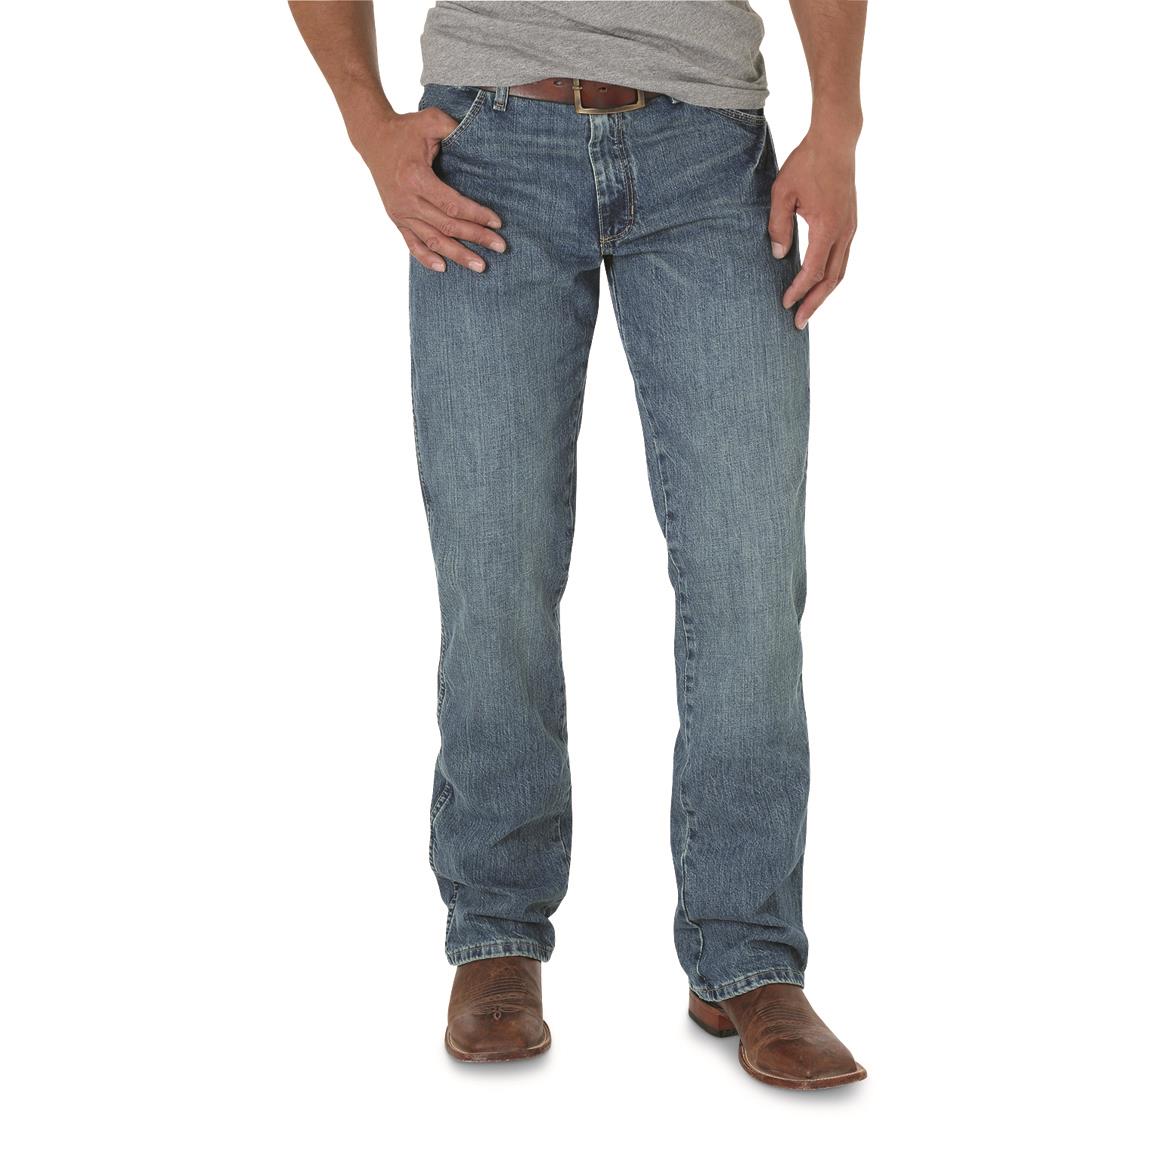 Wrangler Retro Slim Fit Boot Cut Jeans - 676334, Jeans & Pants at ...